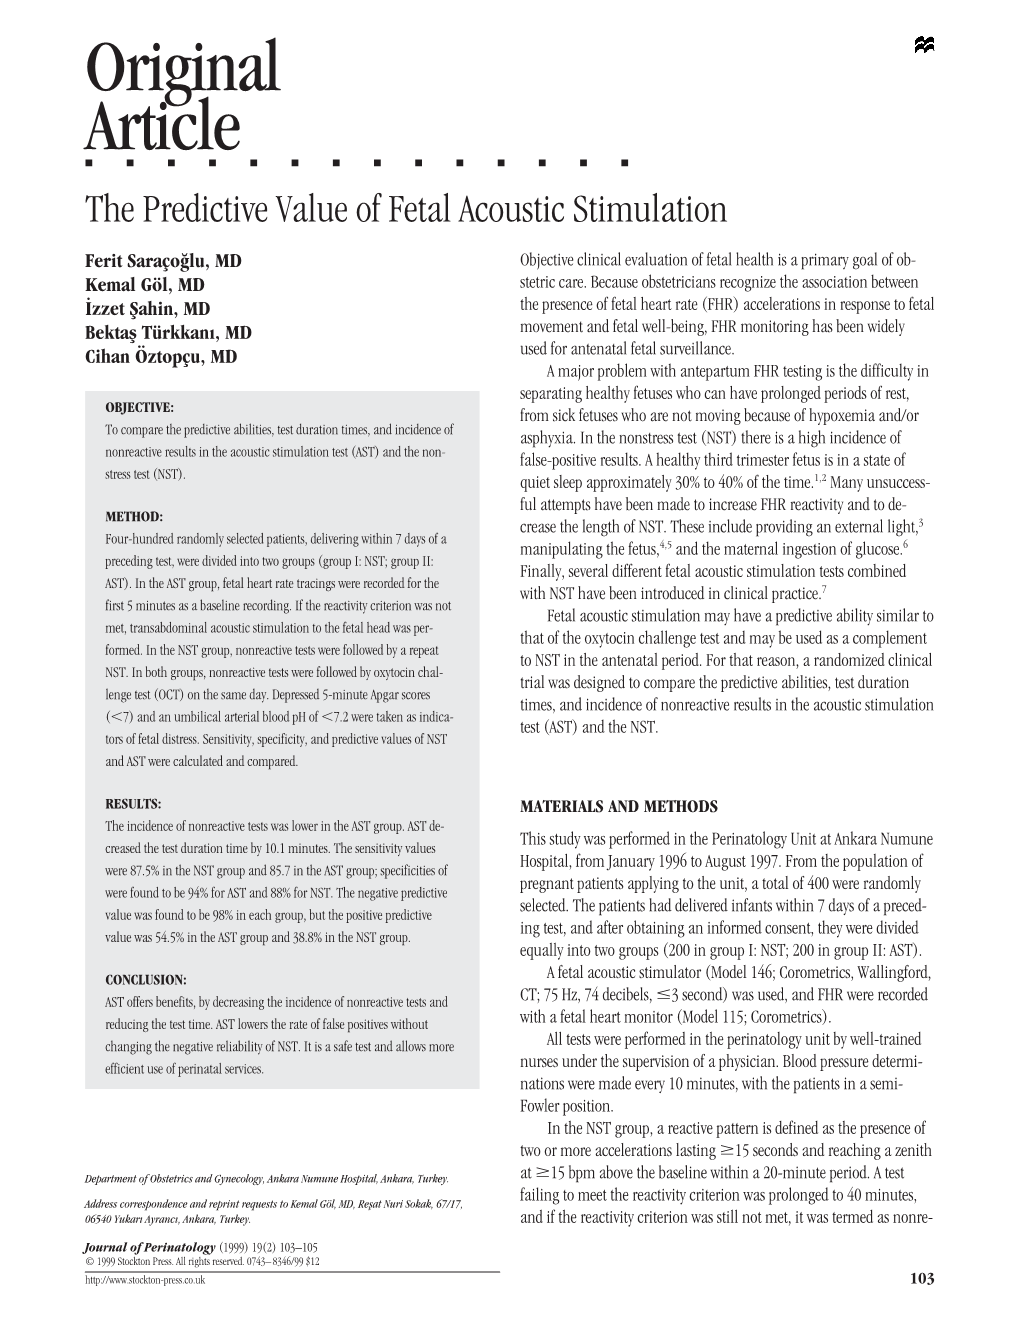 The Predictive Value of Fetal Acoustic Stimulation